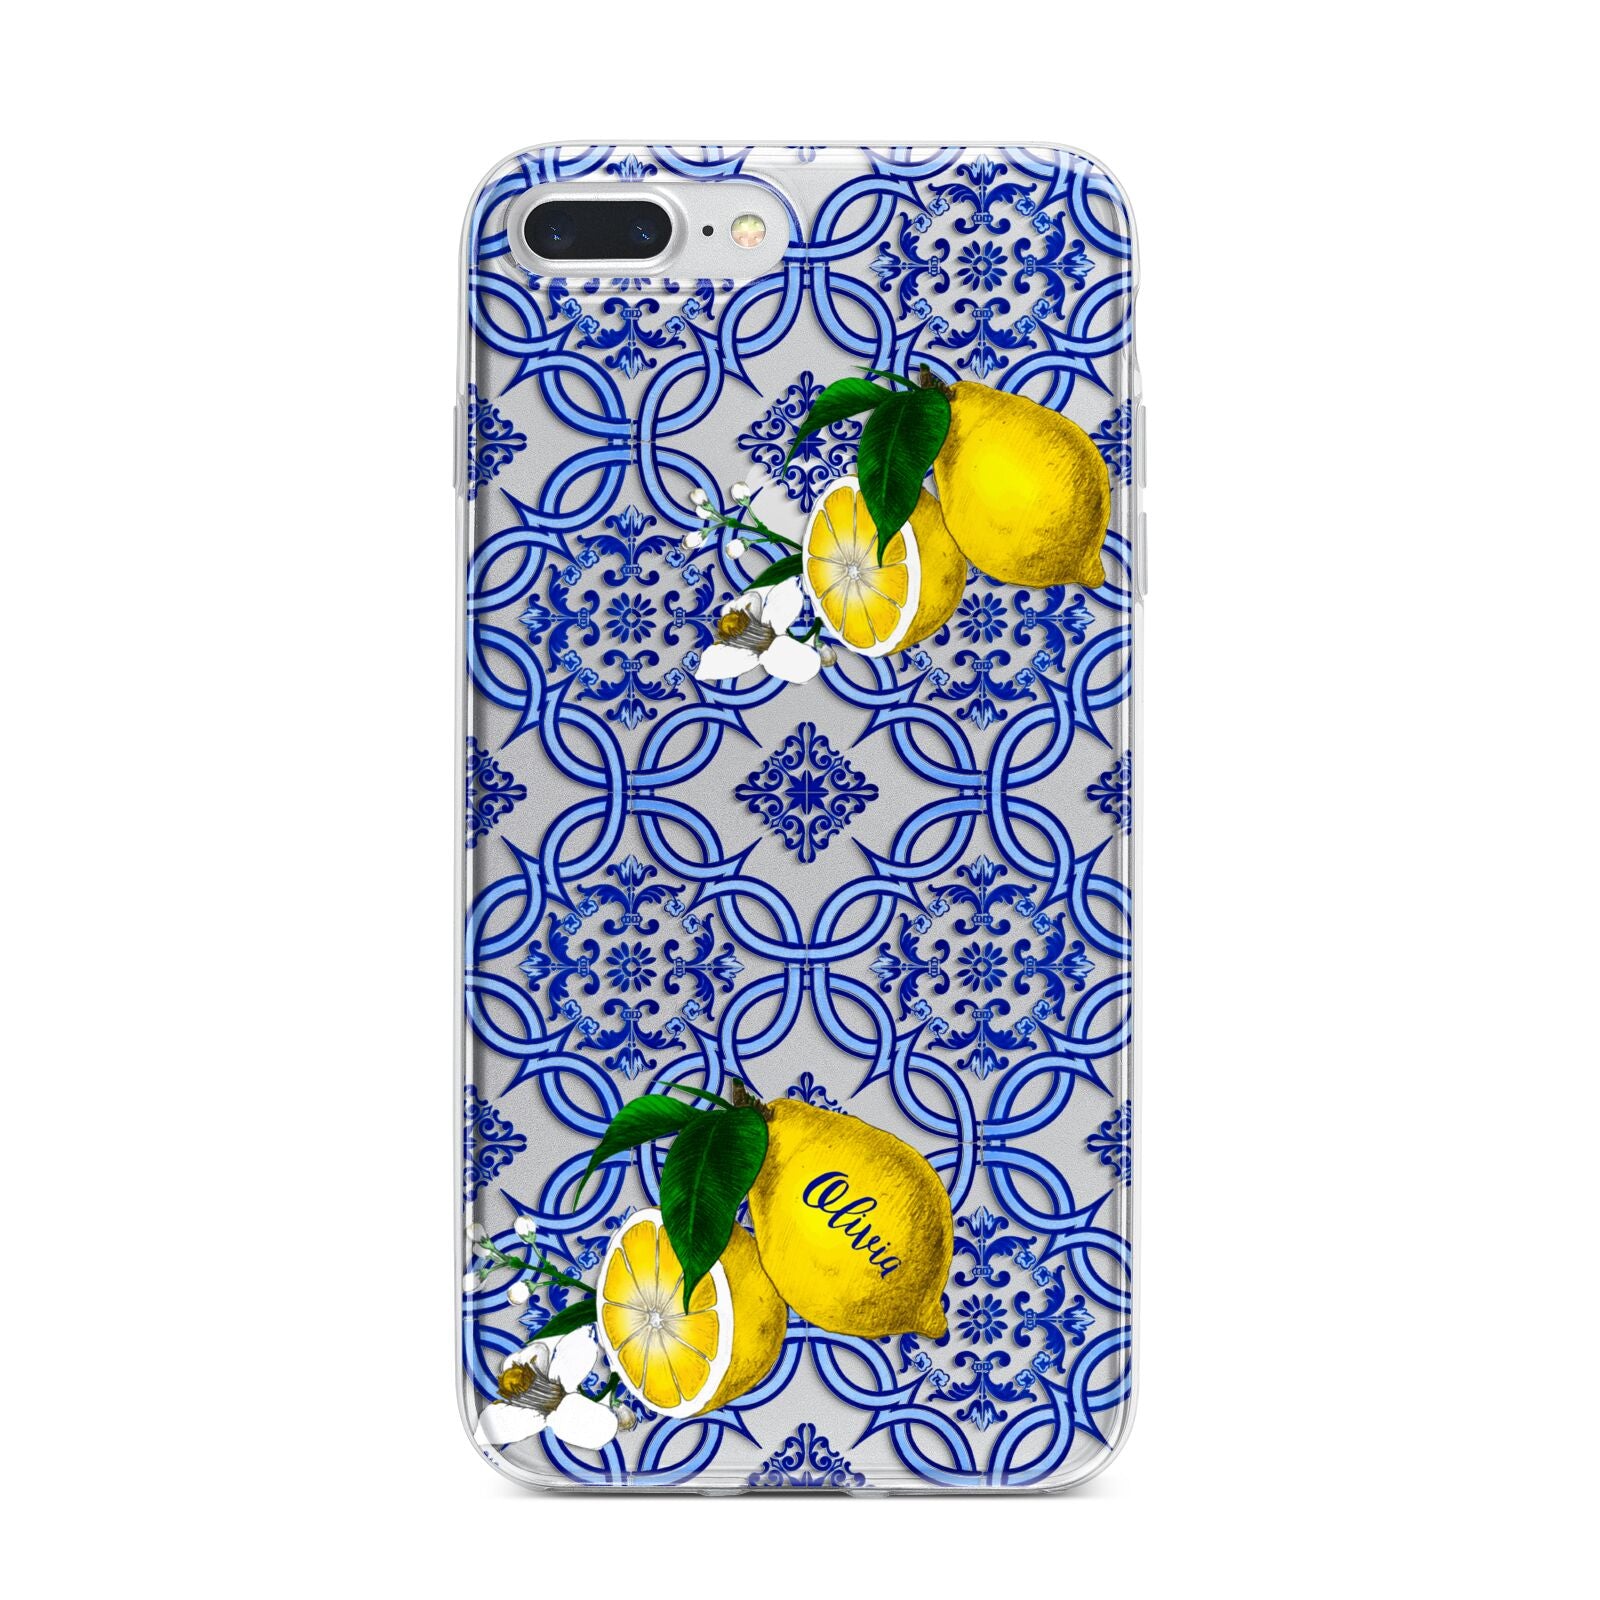 Personalised Mediterranean Tiles and Lemons iPhone 7 Plus Bumper Case on Silver iPhone